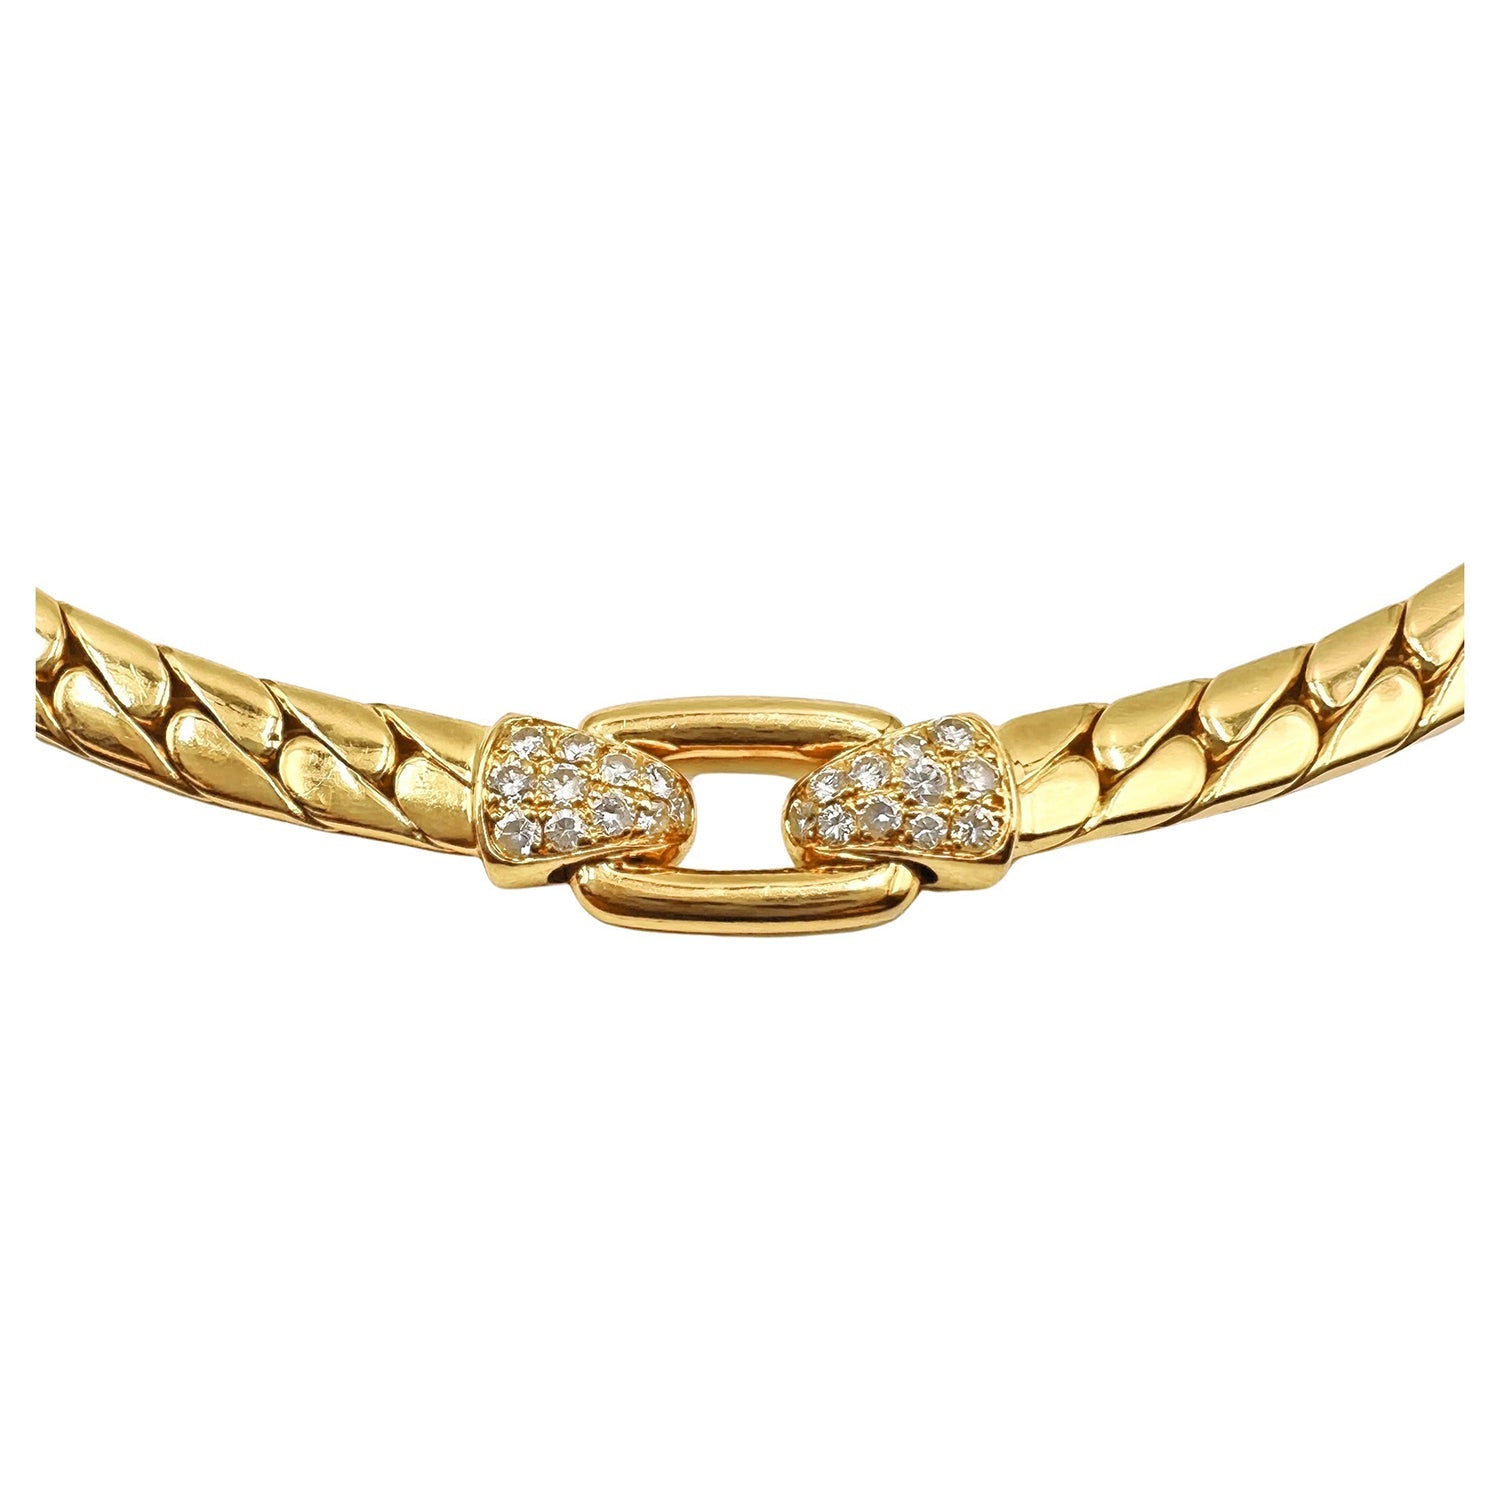 Estate Collection - Cartier 18k Gold Diamond Curb-Link Necklace